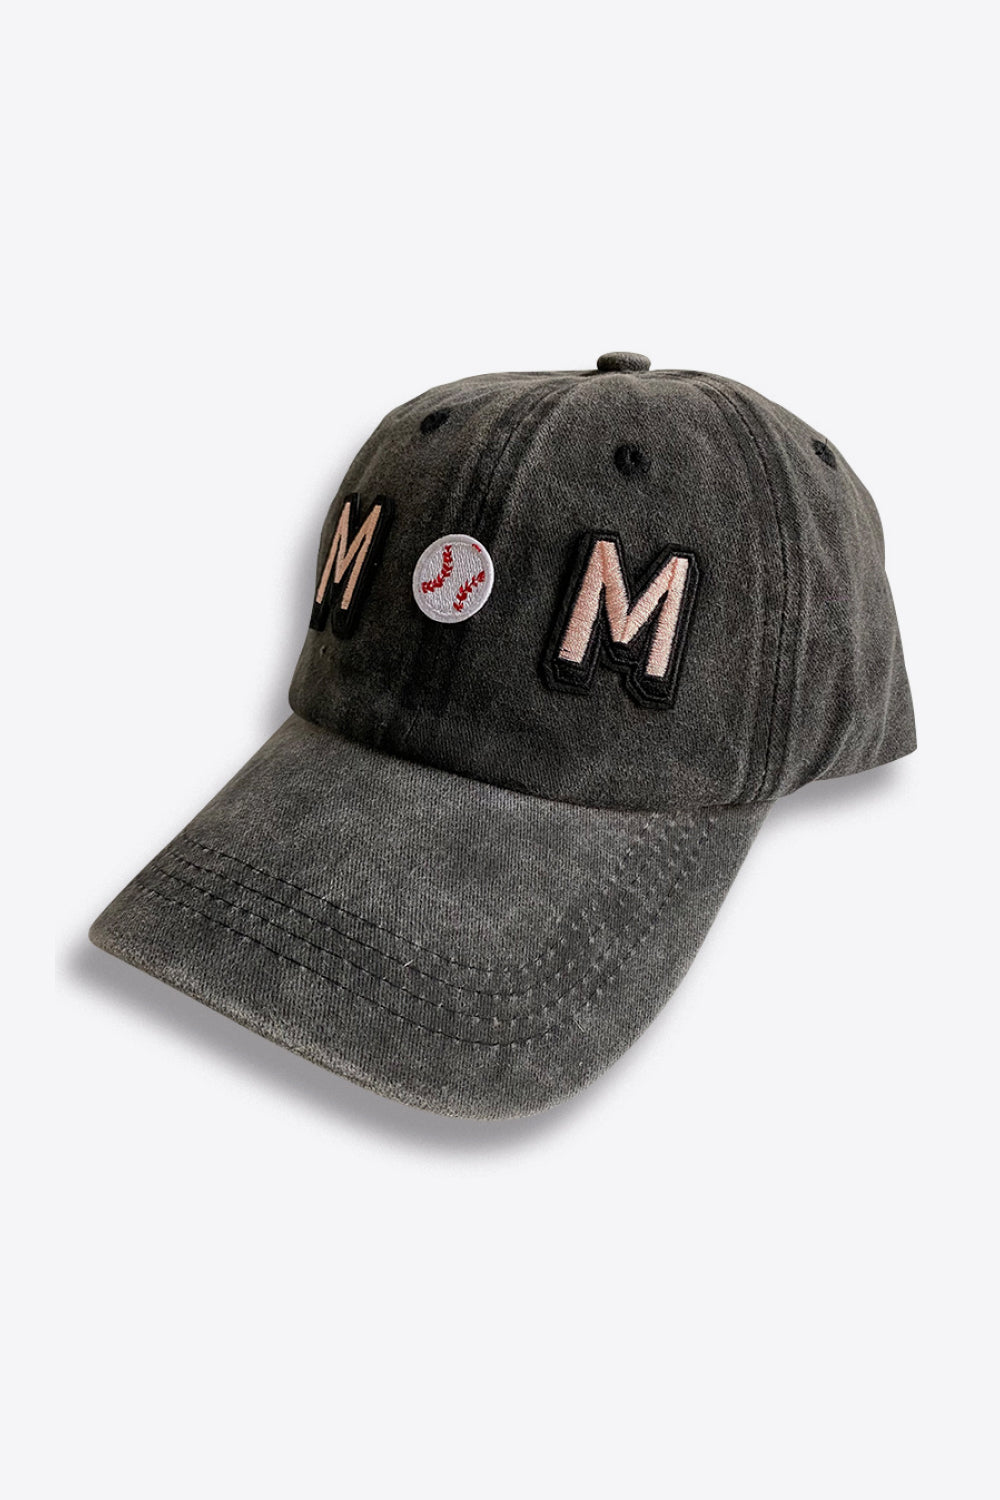 MOM HAT One Size Baseball Cap